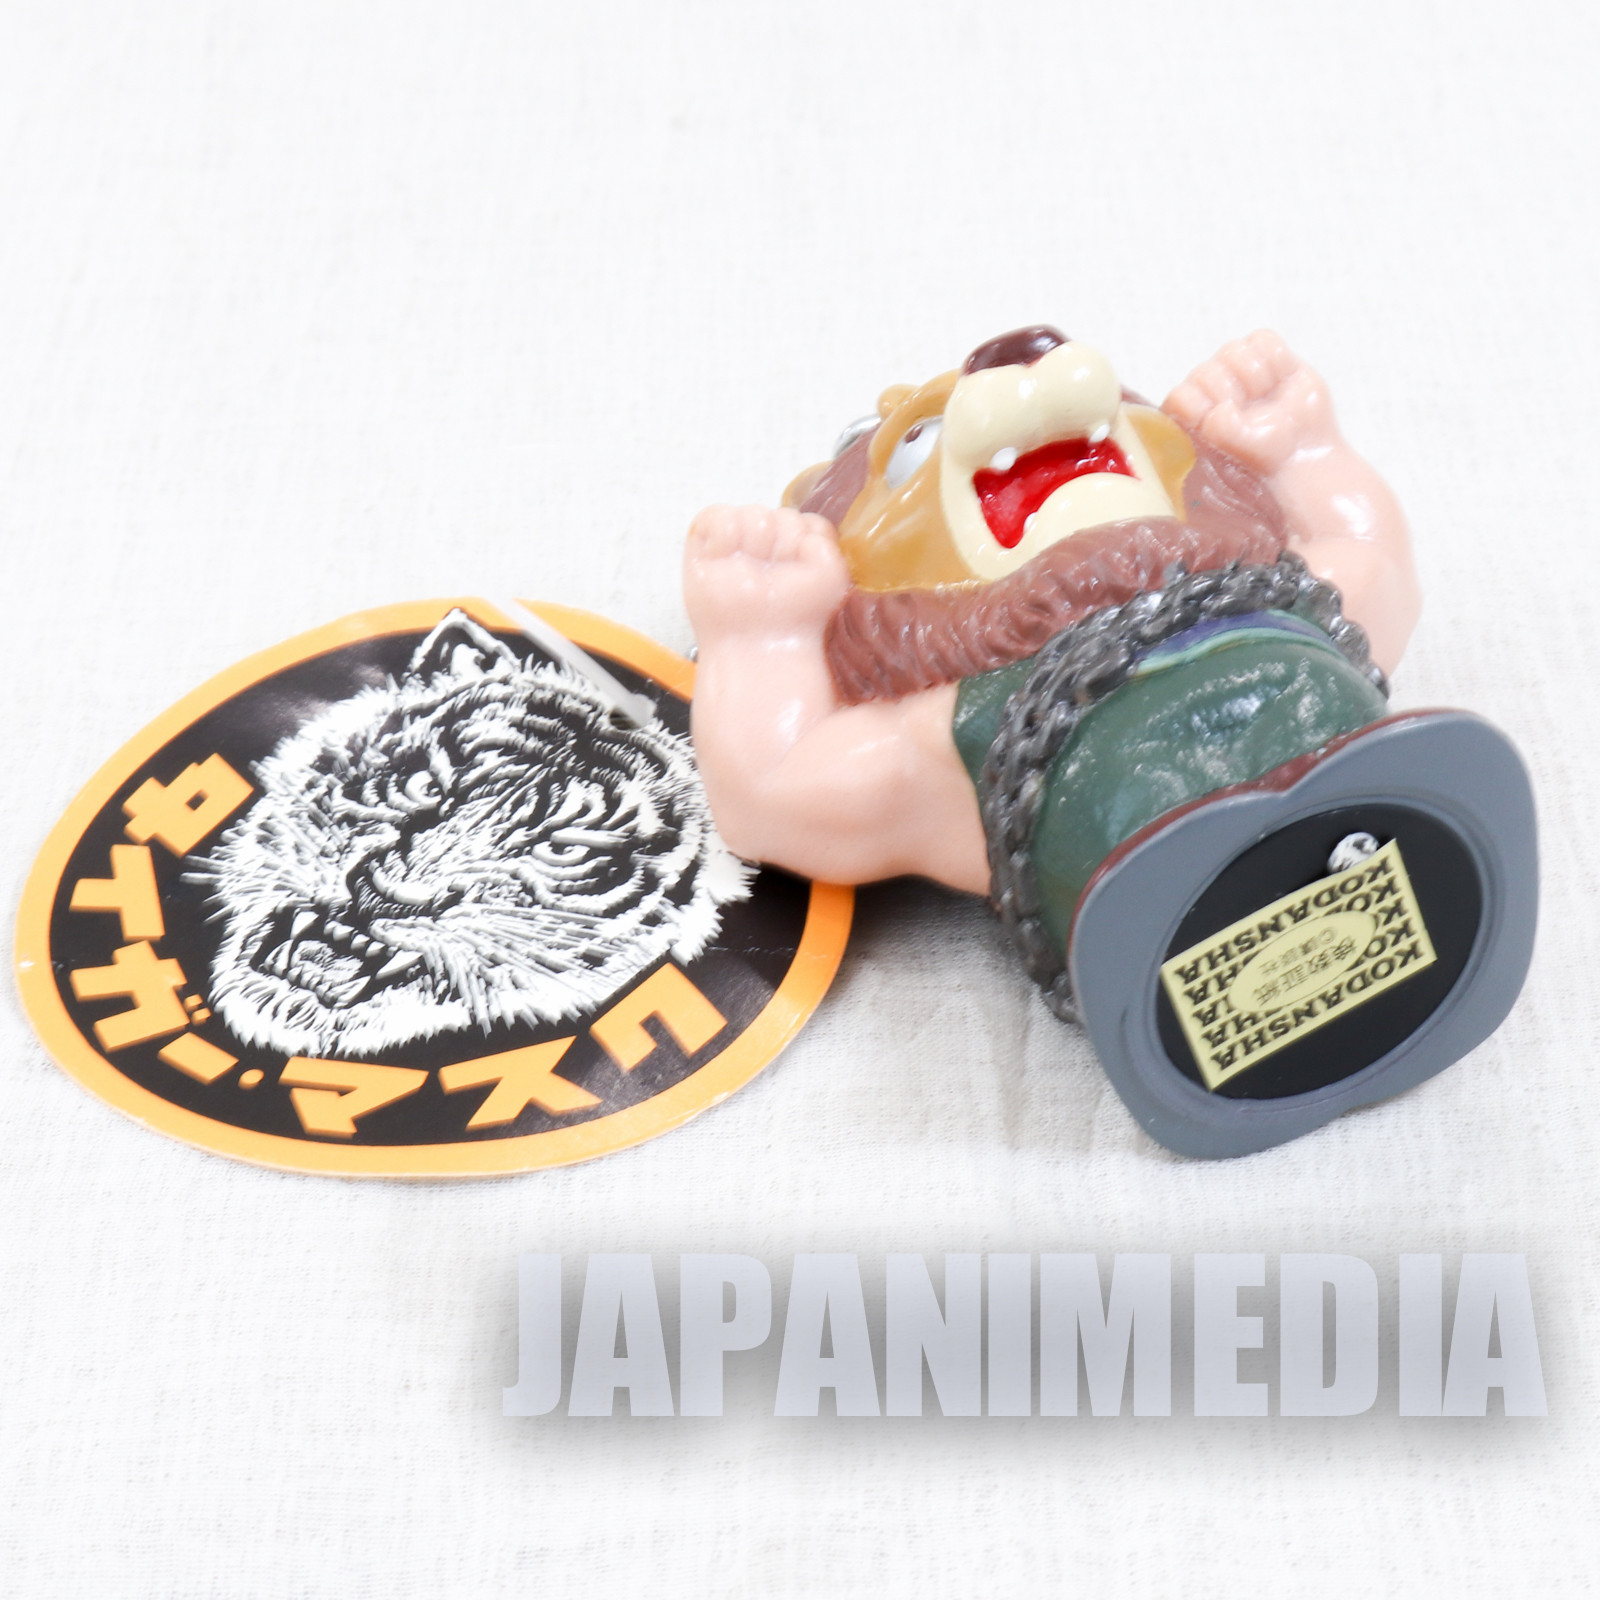 Tiger Mask Lion Man Mascot Figure Key Chain JAPAN ANIME MANGA Pro Wrestling